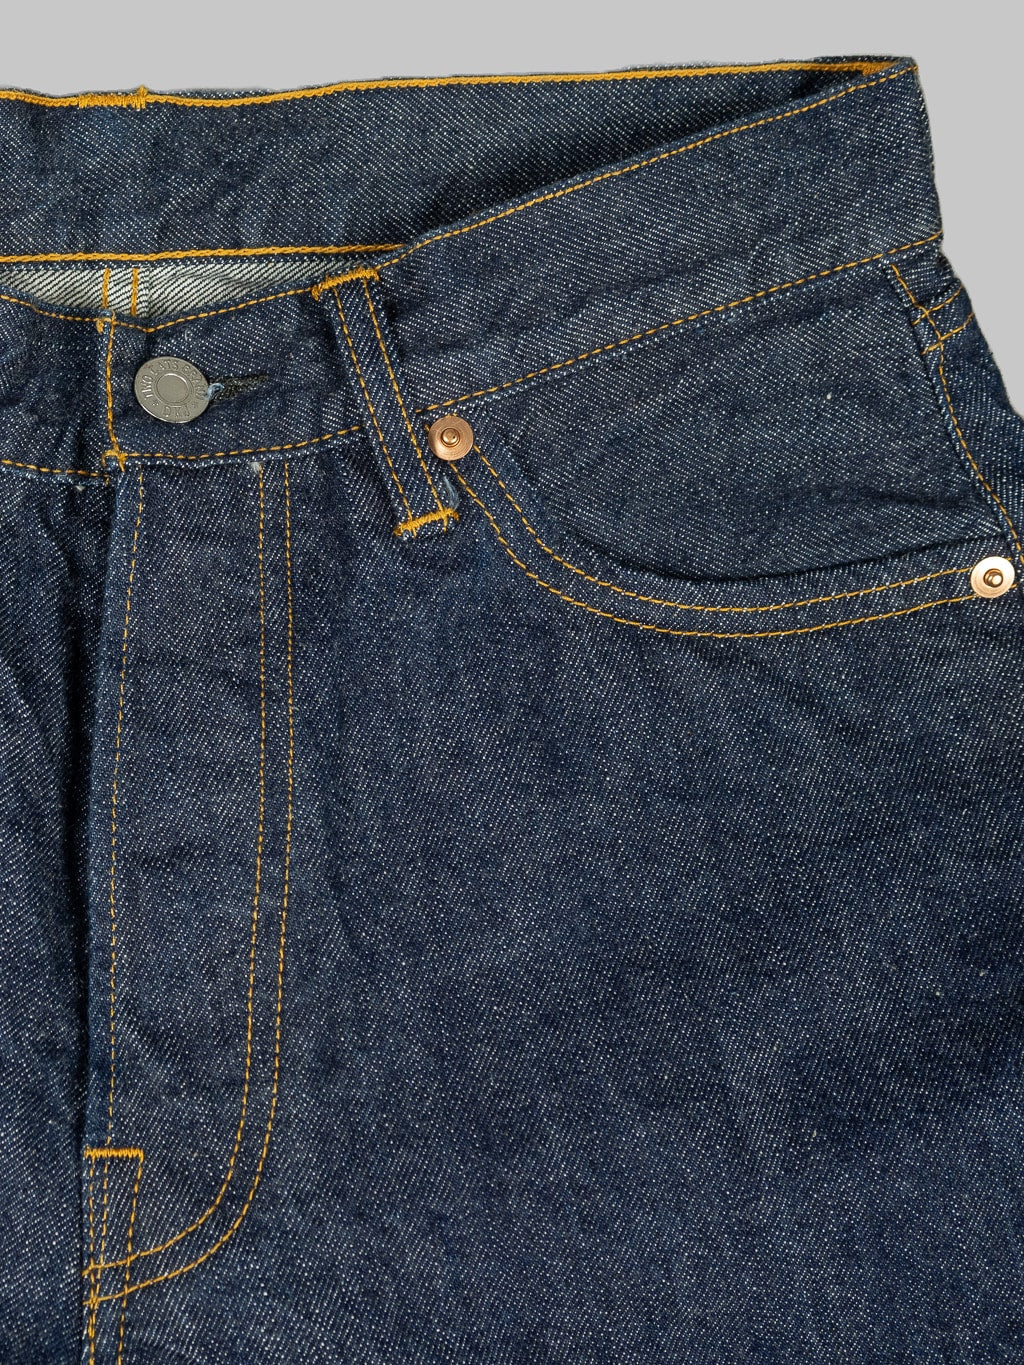 tcb 60s regular straight jeans front pocket